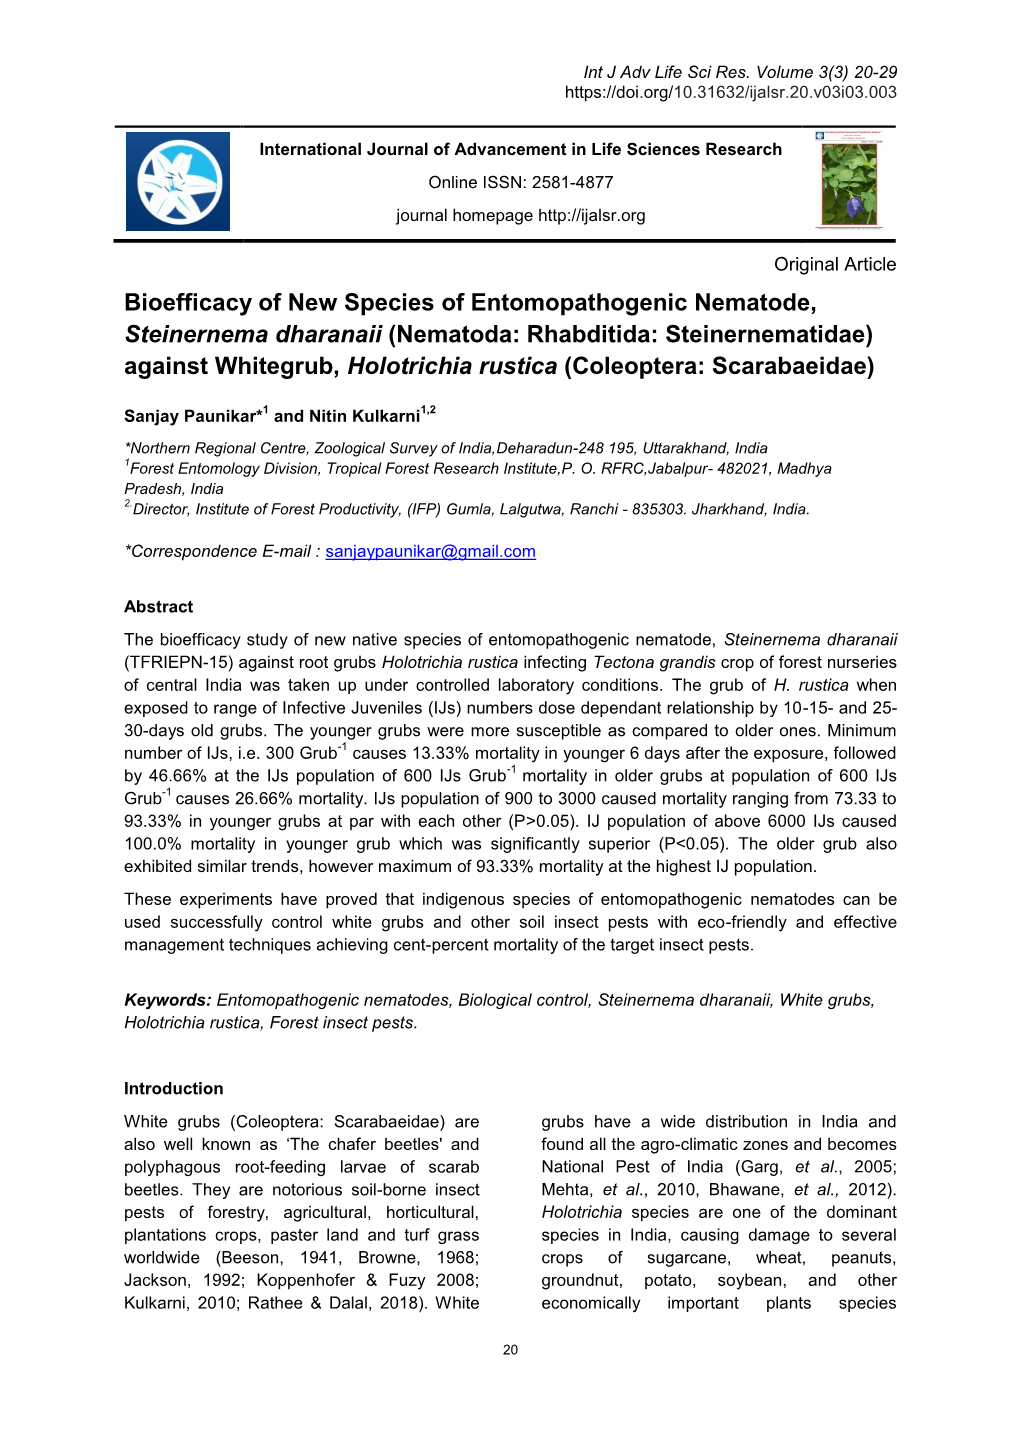 Bioefficacy of New Species of Entomopathogenic Nematode